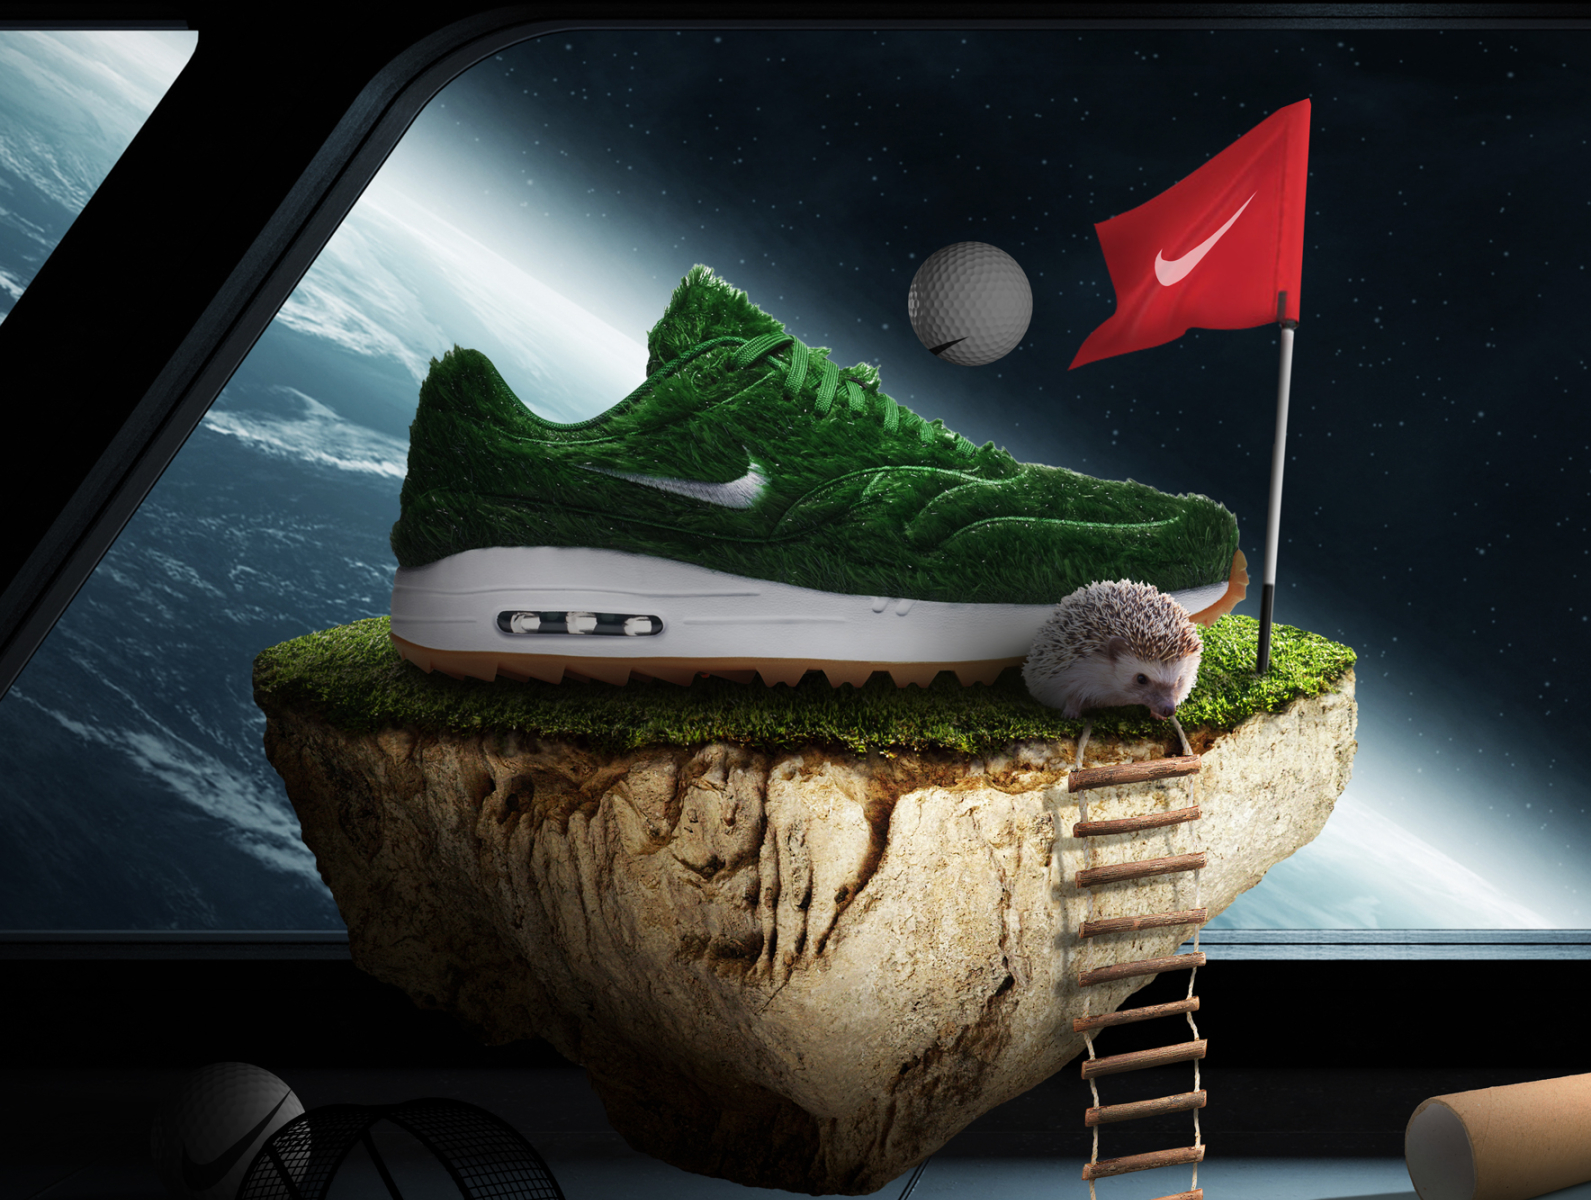 Mata barbilla Mortal Nike Air Max 1 | Golf Grass - Poster by Uros Delic on Dribbble